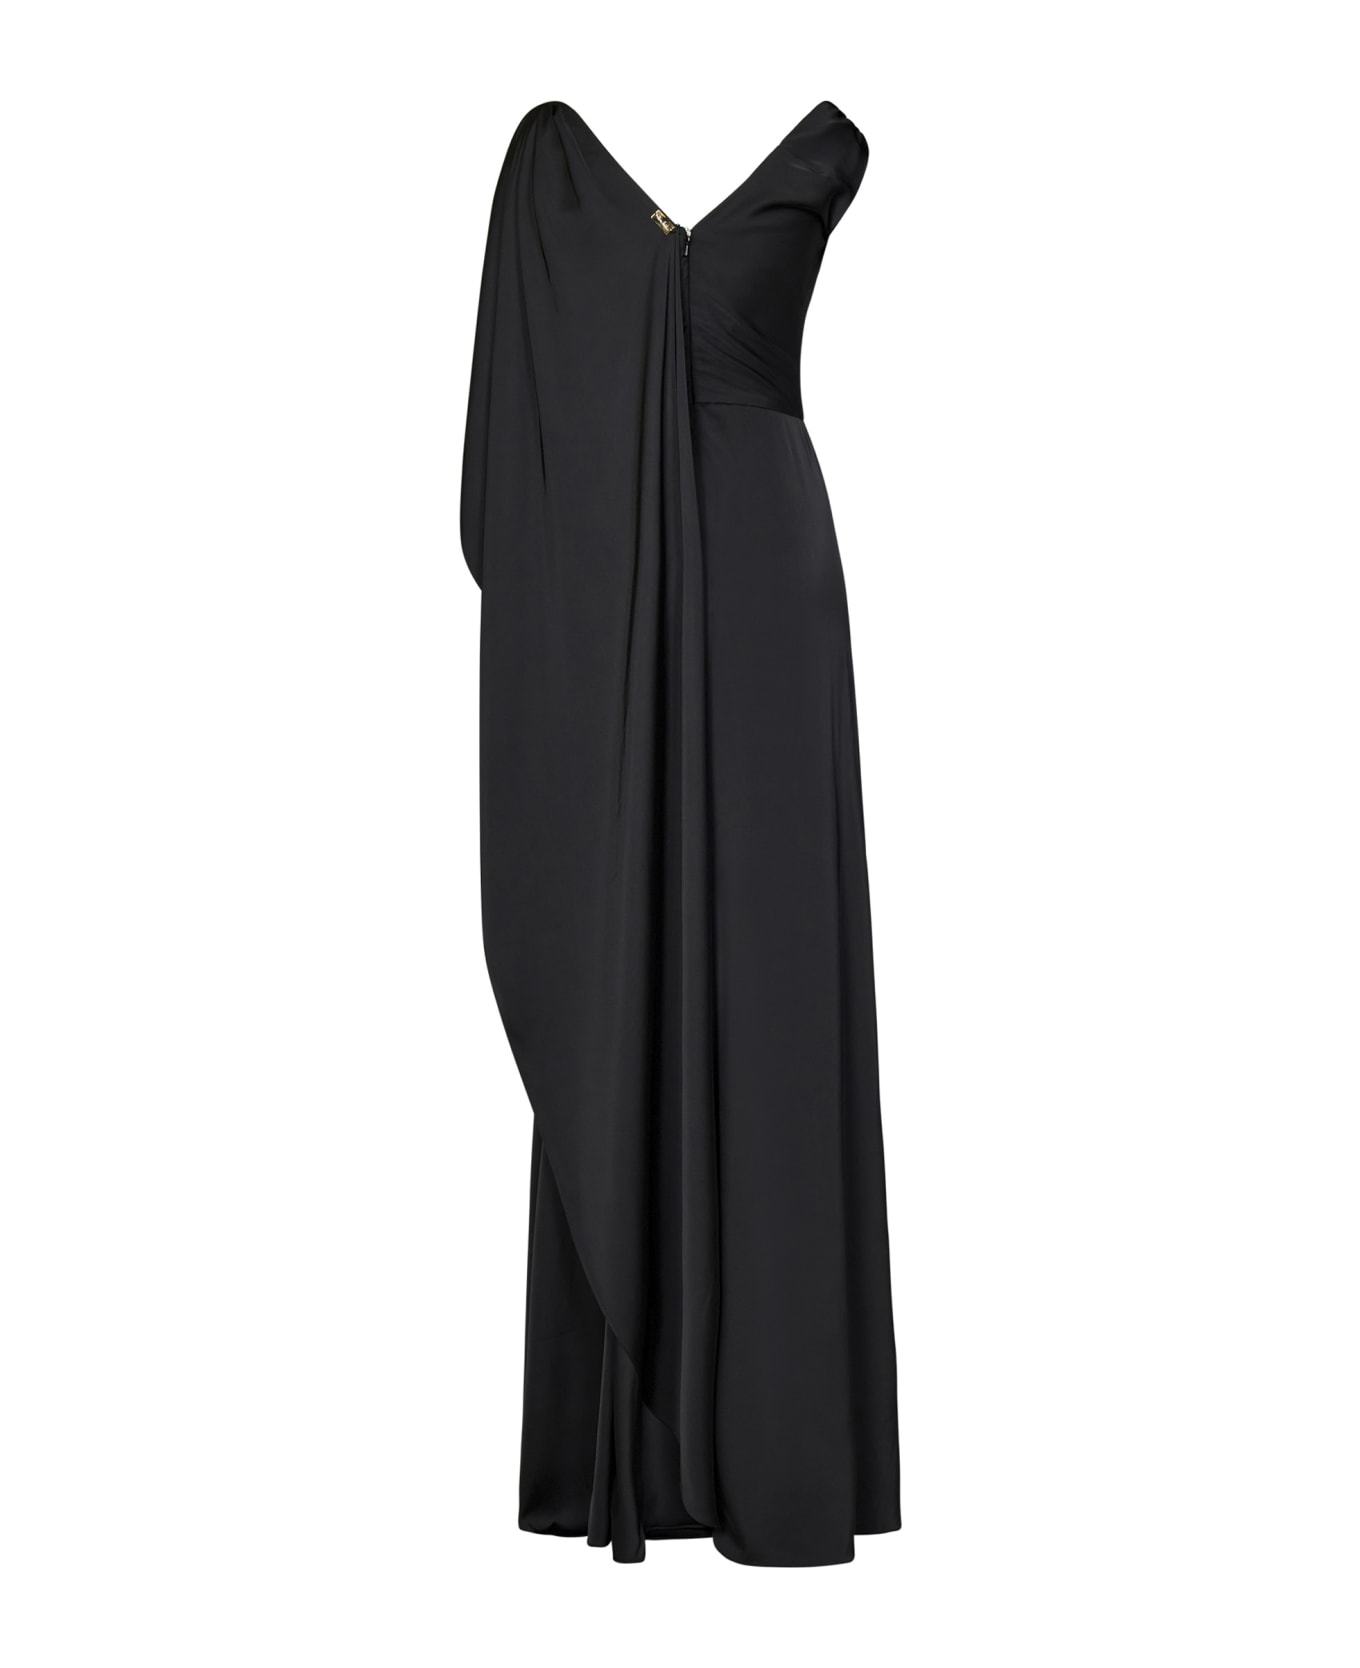 Rhea Costa Long Dress - Black